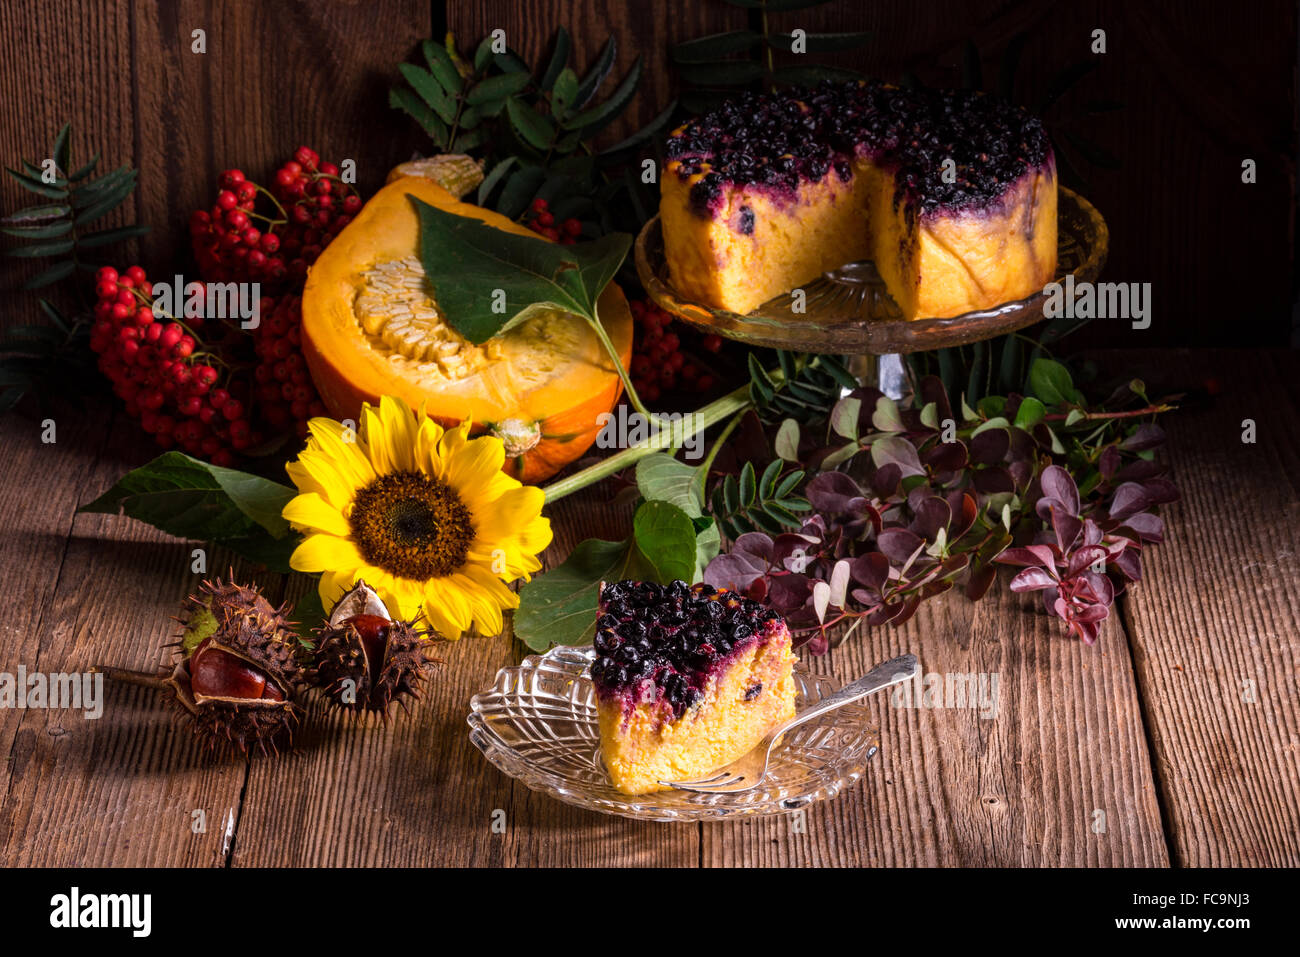 Autumn pumpkin cheesecake with cranberries Stock Photo